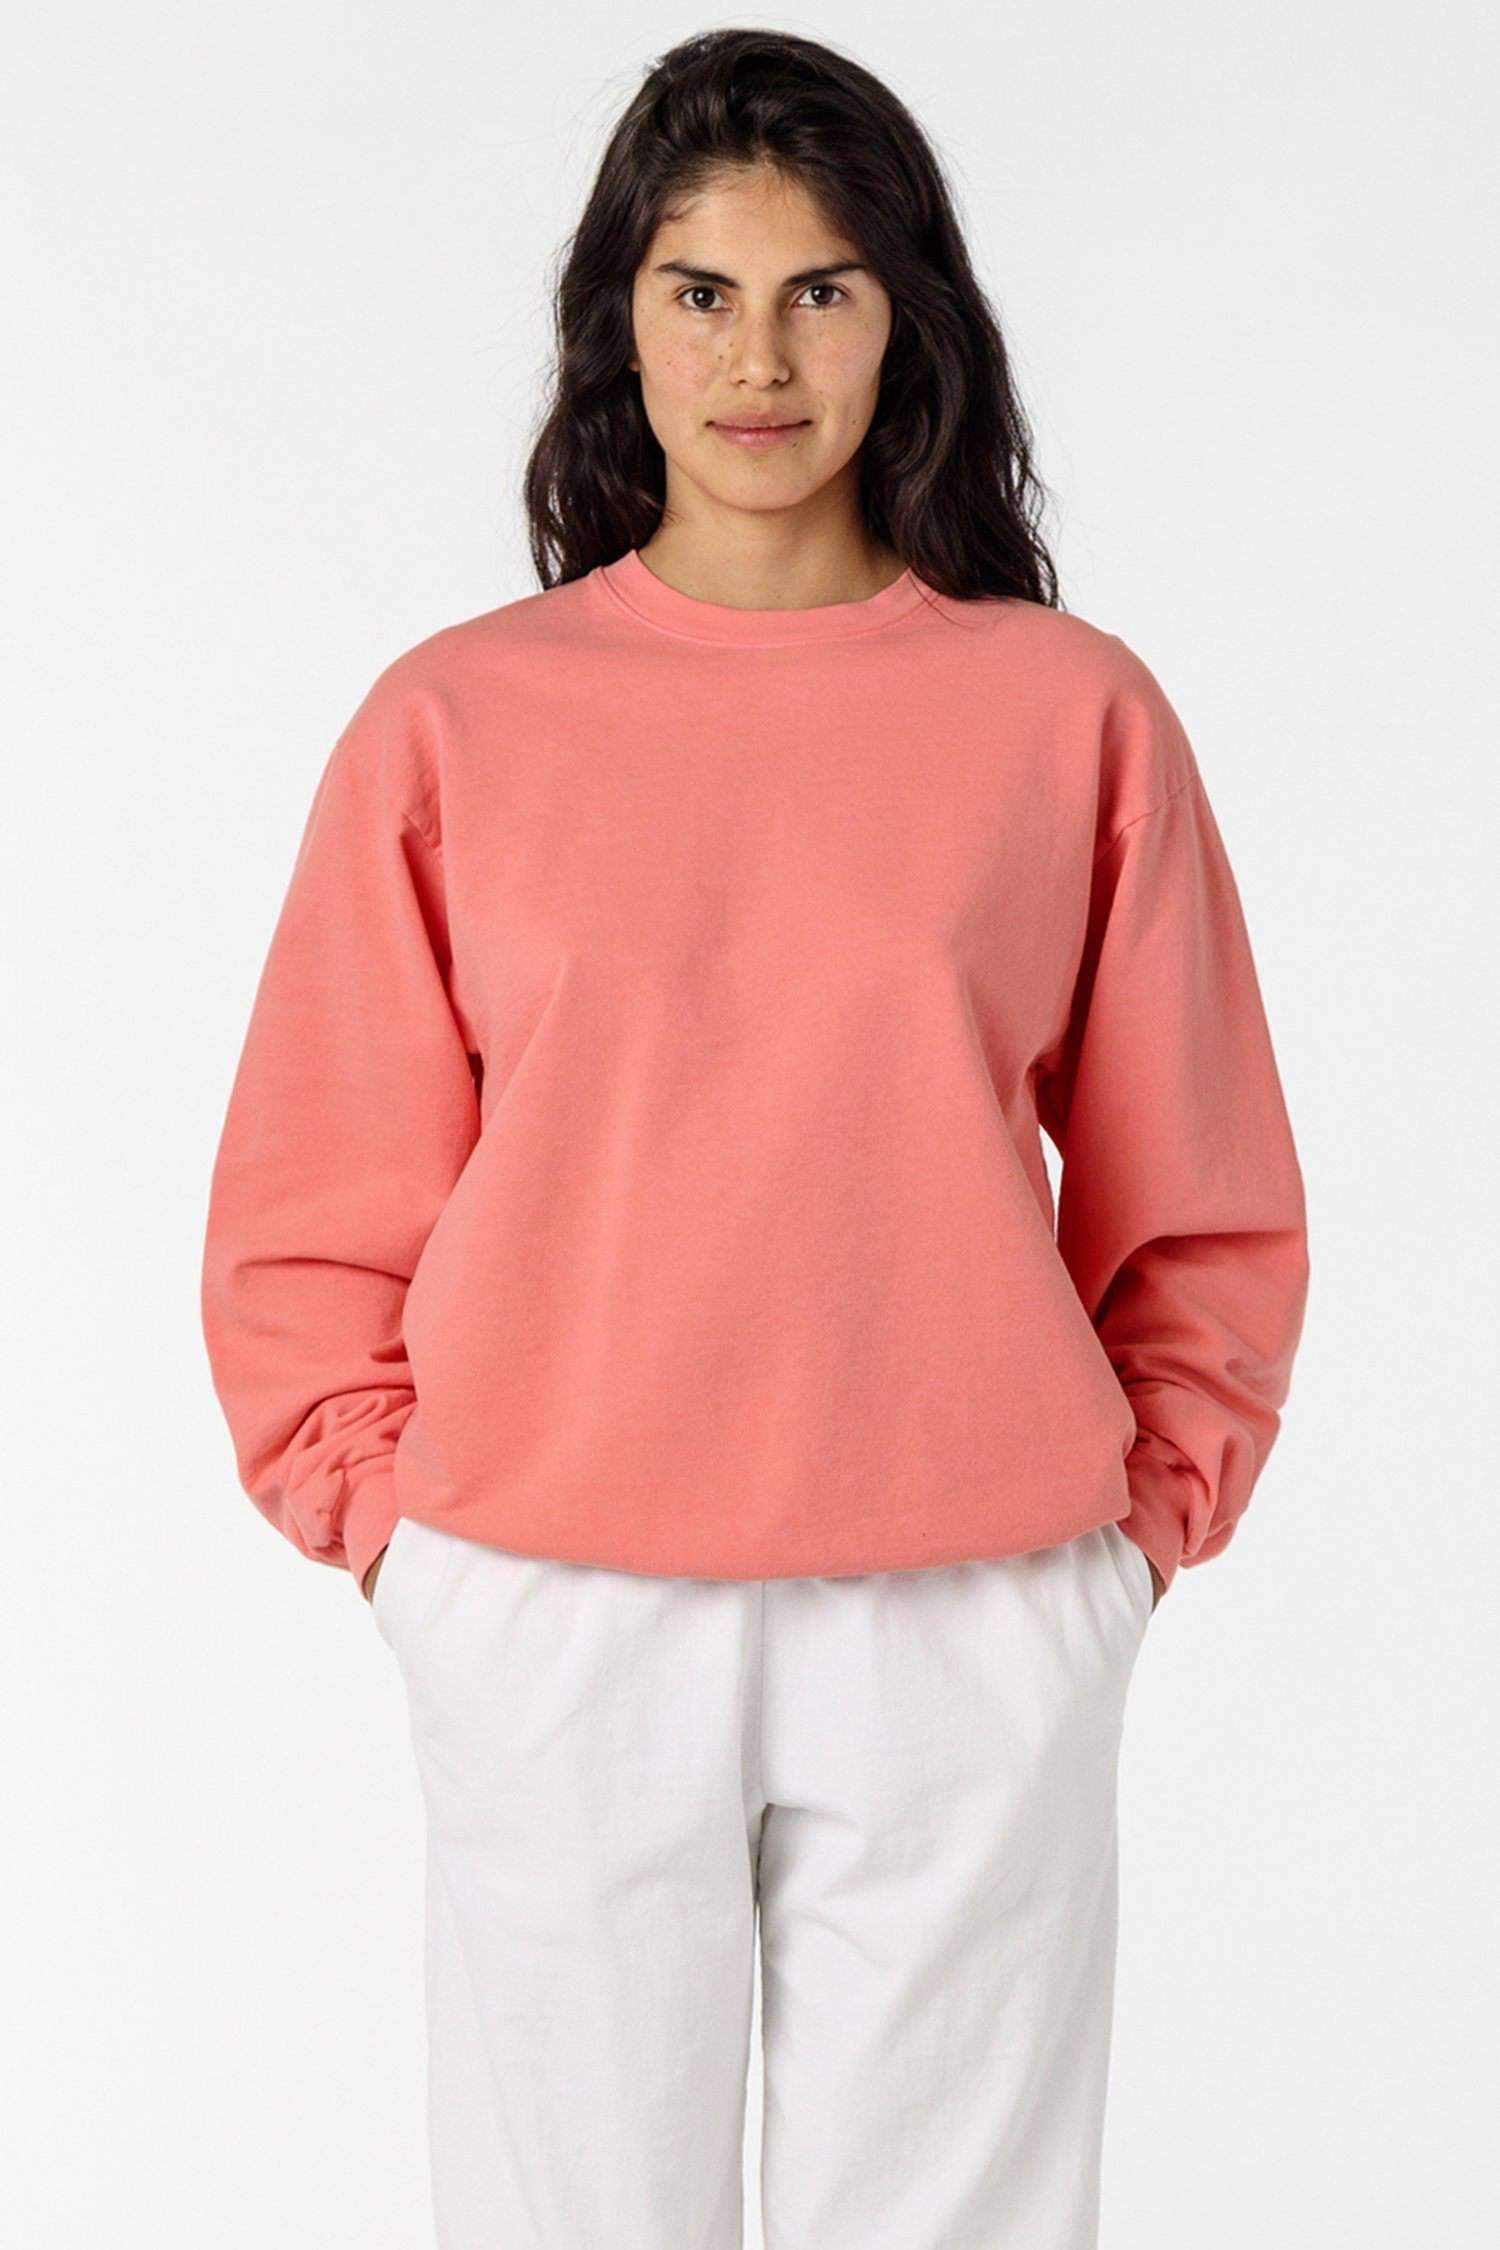 MWT07GD Unisex - Long Sleeve Garment Dye French Terry Pullover Sweatshirt Los Angeles Apparel Salmon XS 